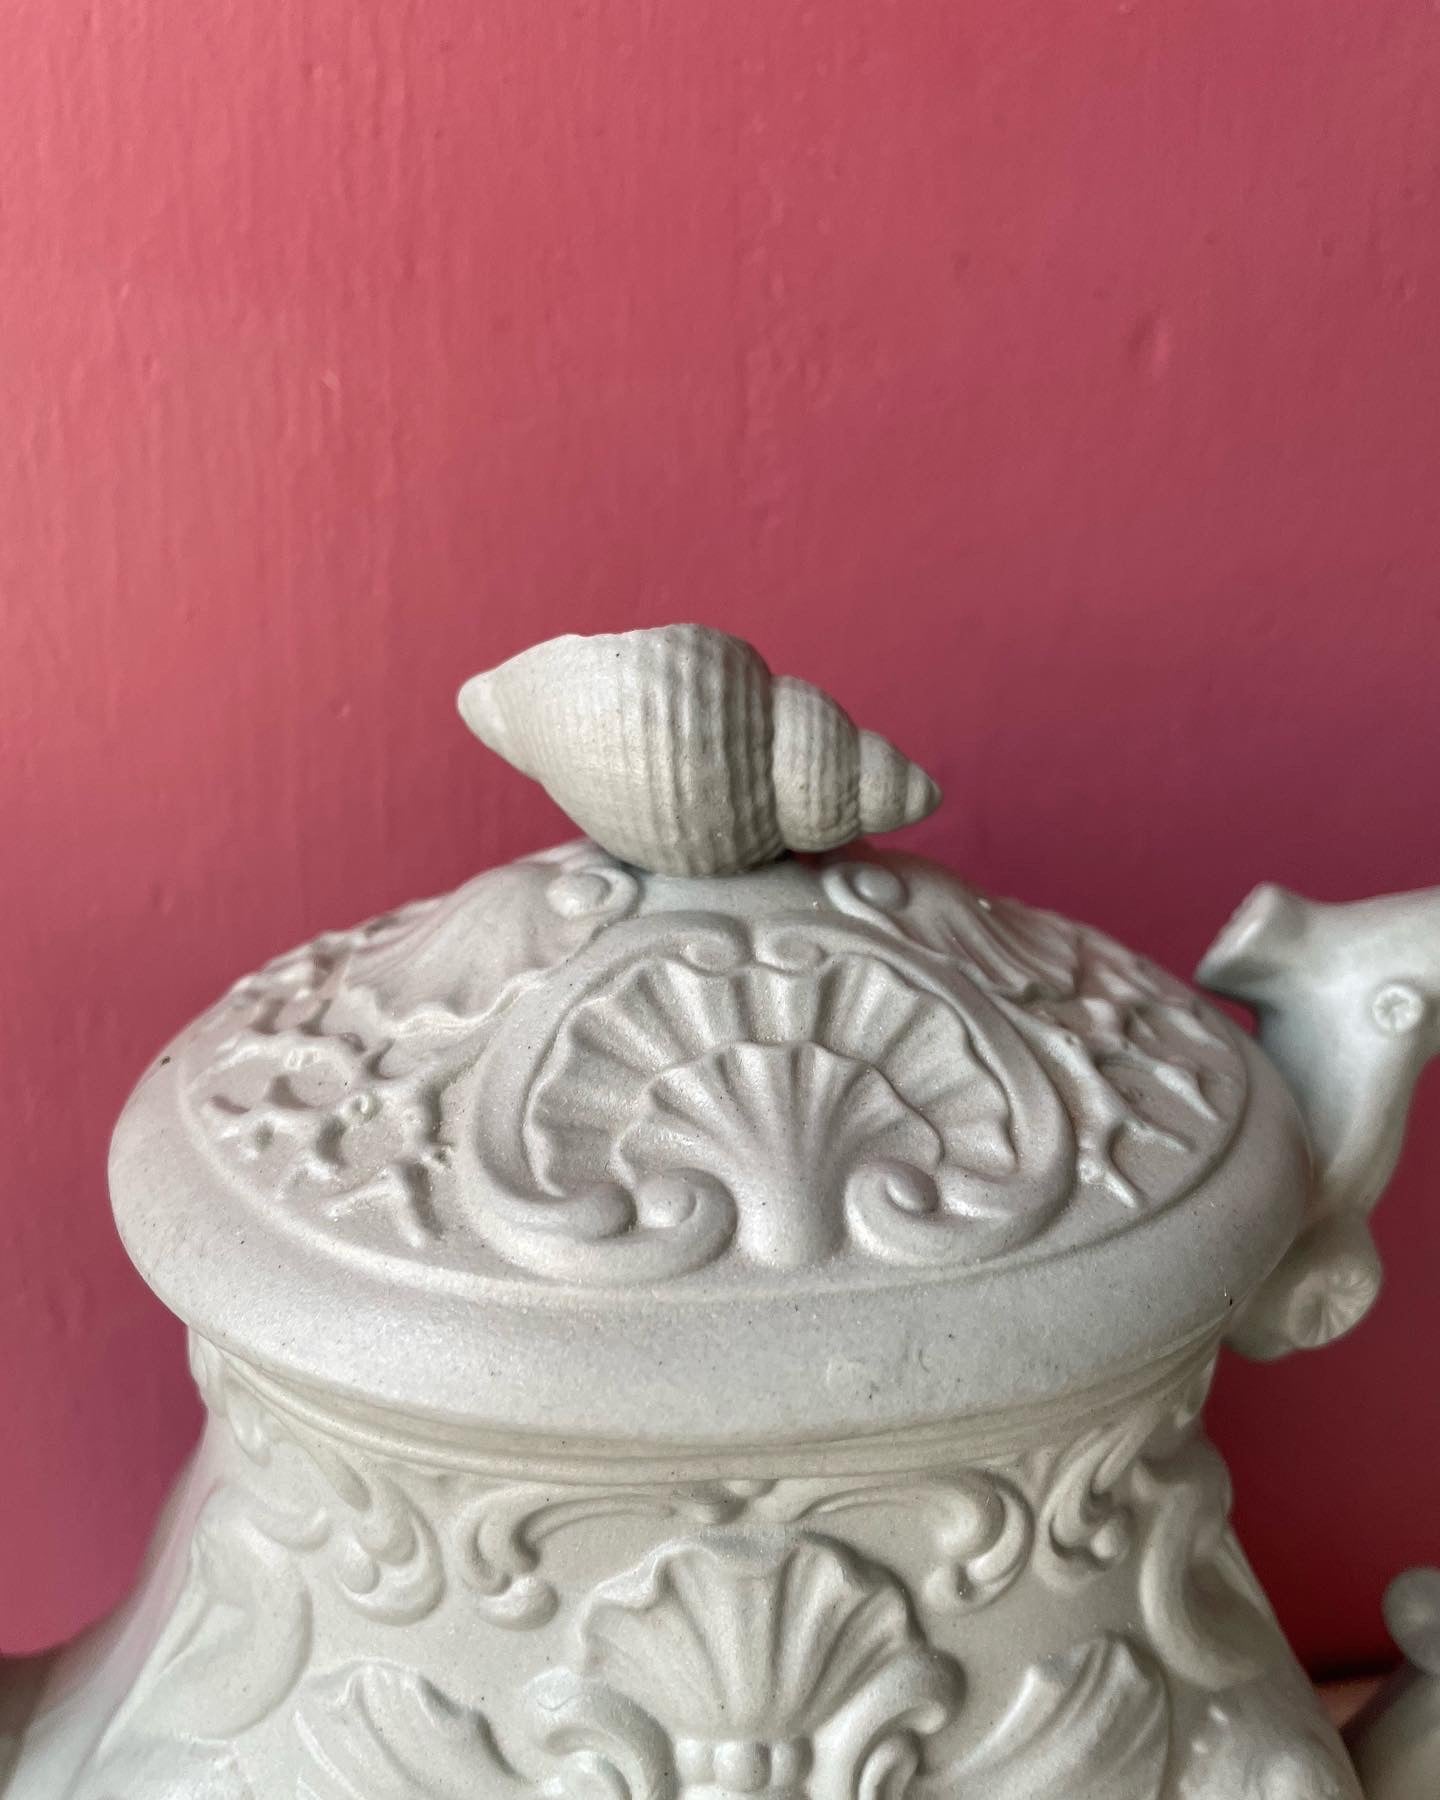 Aesthetic Movement Teapot with Seashell Motifs